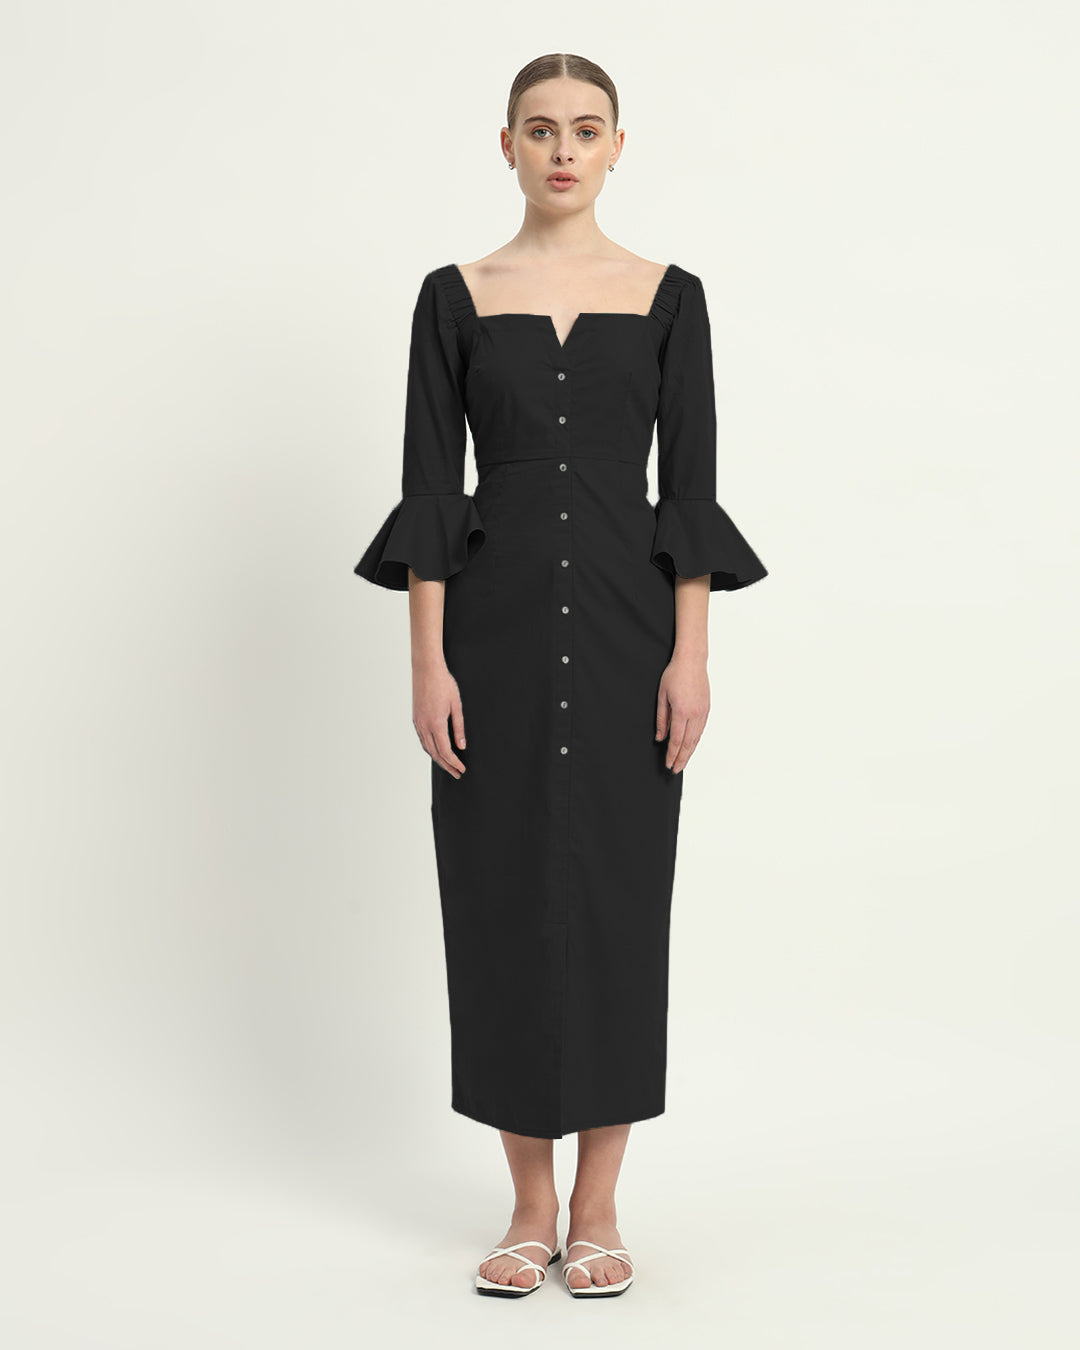 The Noir Rosendale Cotton Dress